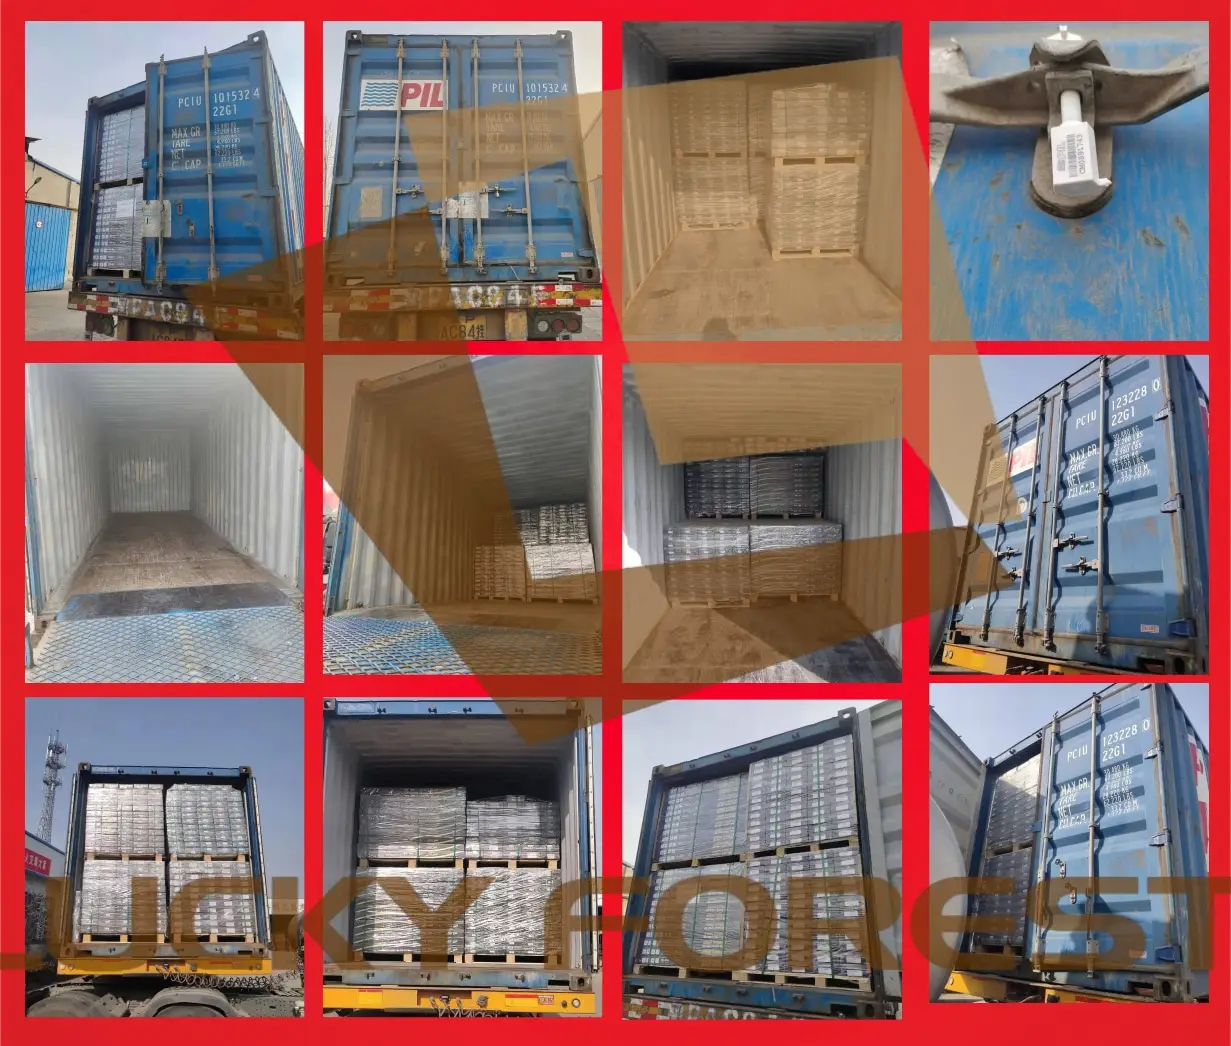 Laminate flooring containers to Uruguay and Saudi Arabia